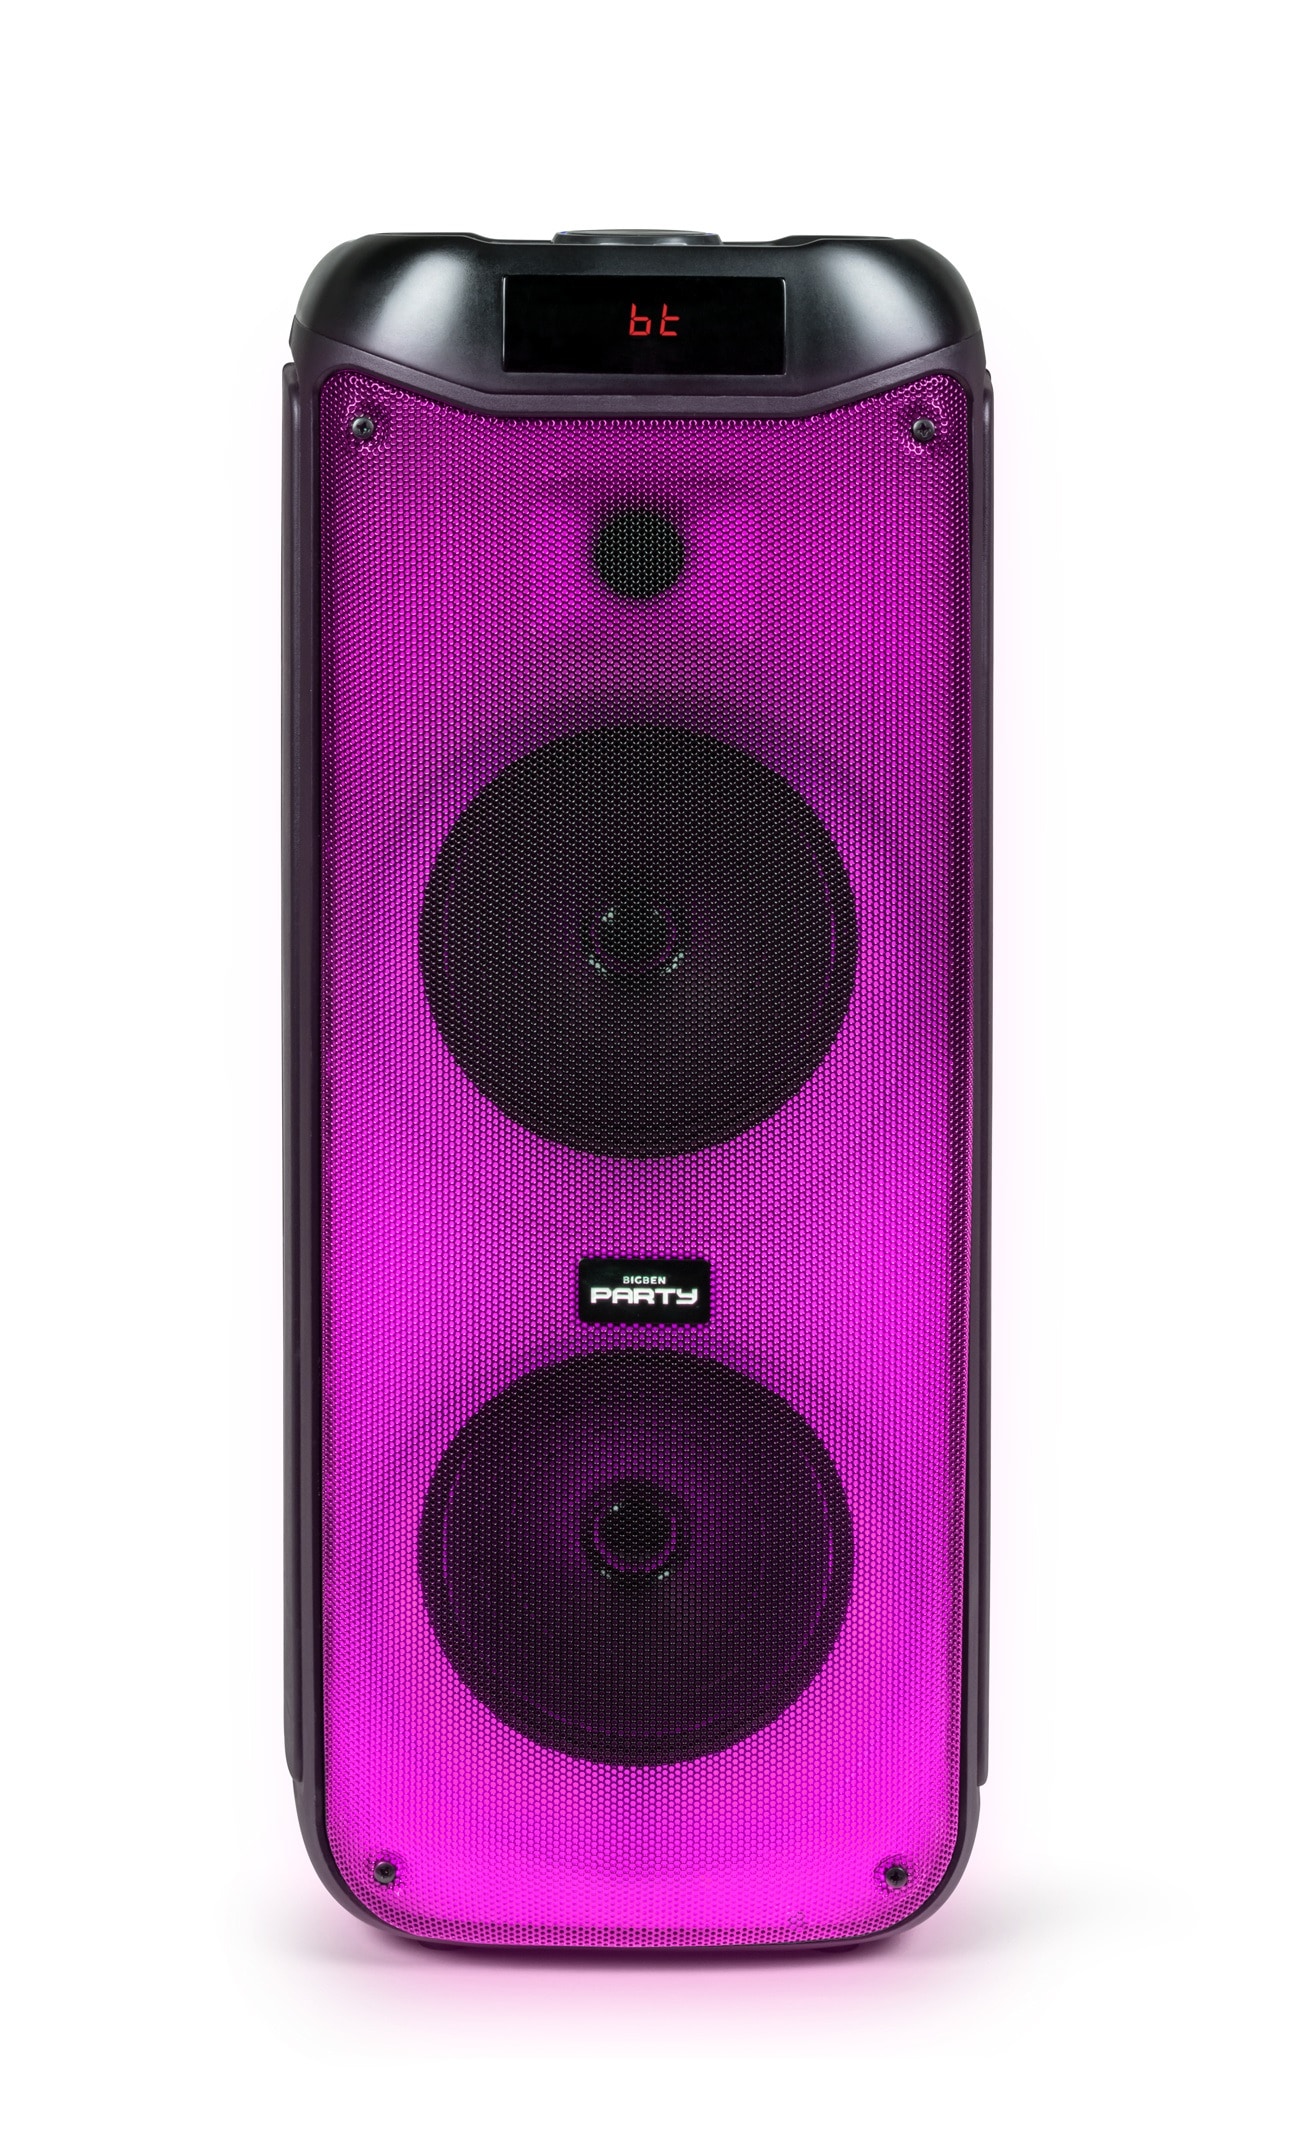 BigBen Party-Lautsprecher »PARTY Box L AU387216«, mit RGB-Beleuchtung,  kabellos, inkl. Mikrofon online kaufen